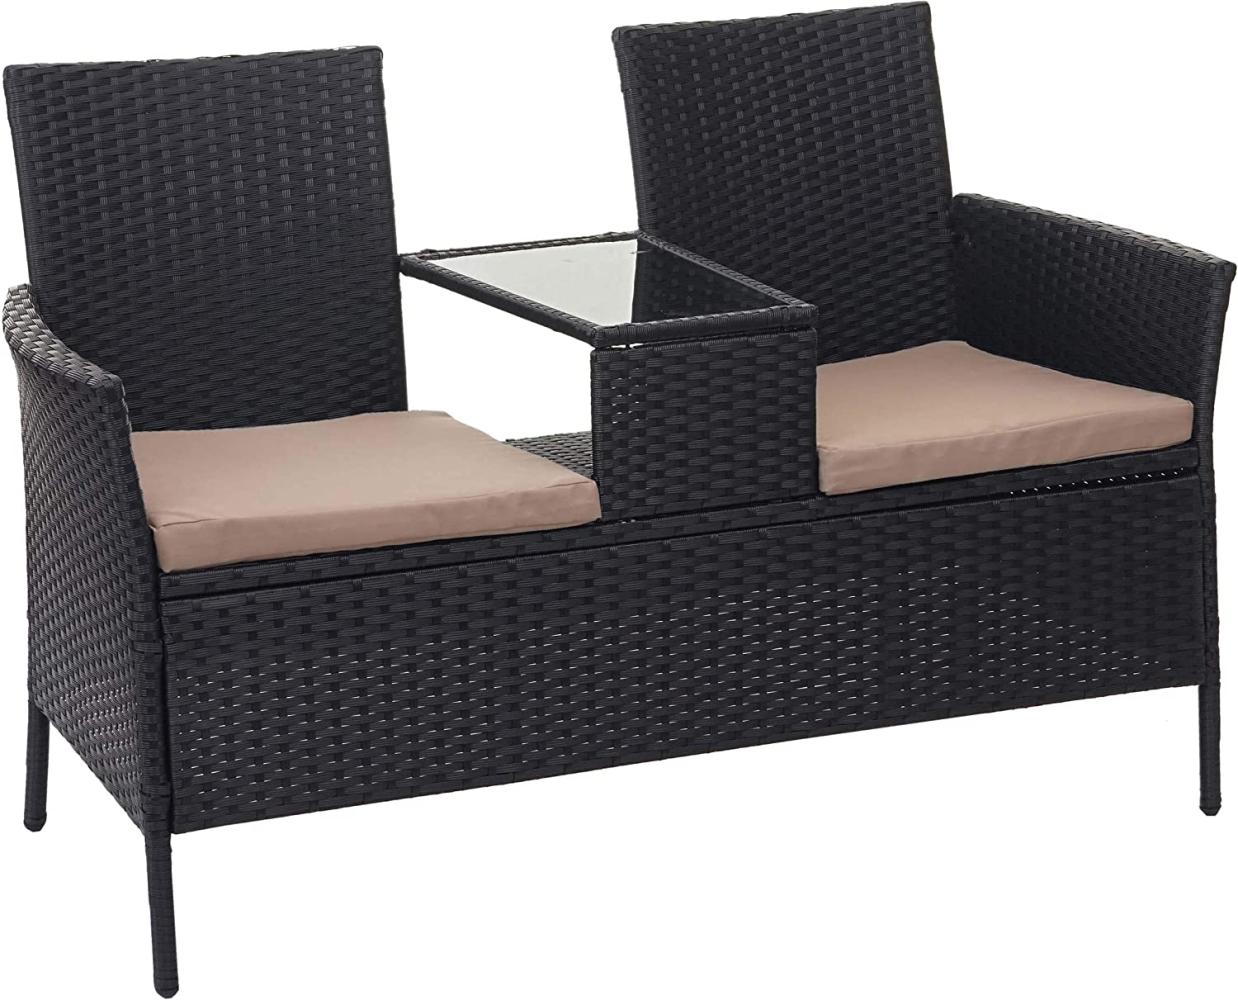 Poly-Rattan Sitzbank mit Tisch HWC-E24, Gartenbank Sitzgruppe Gartensofa, 132cm ~ schwarz, Kissen creme Bild 1